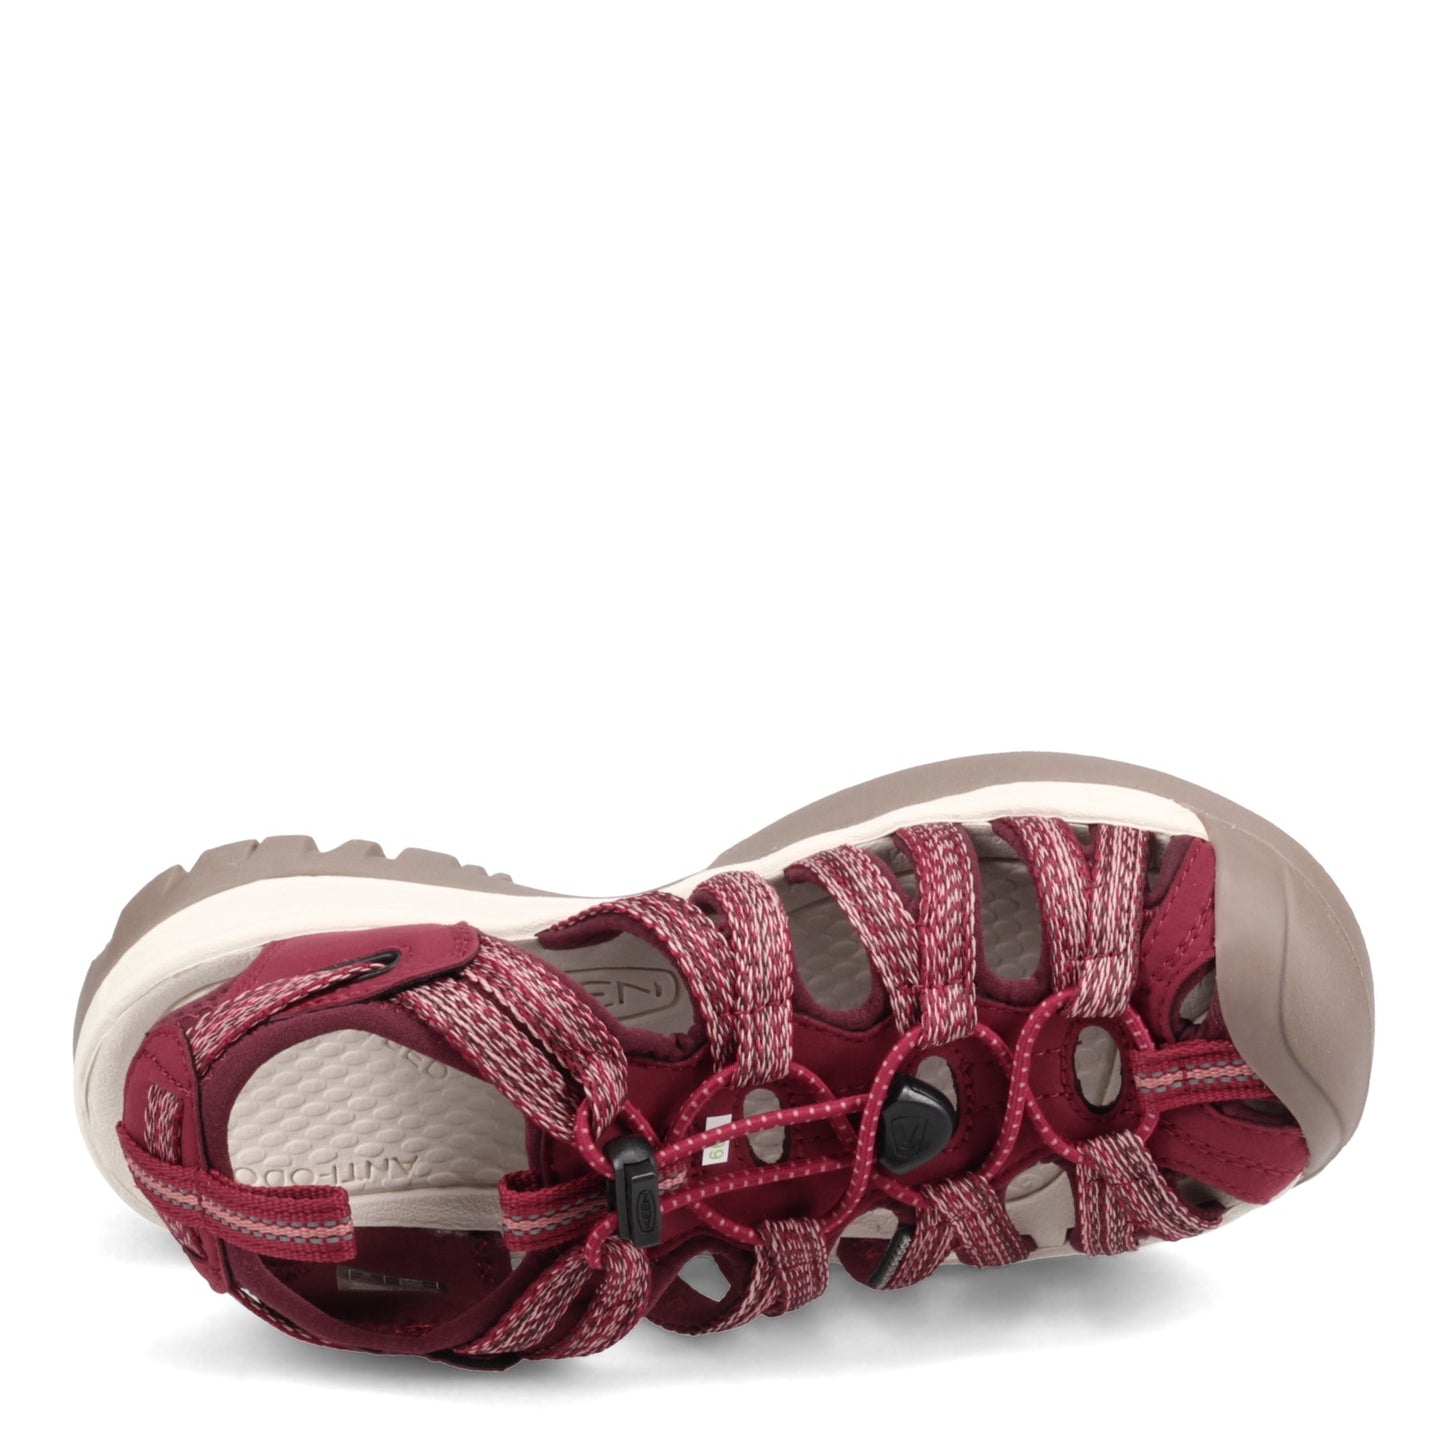 Peltz Shoes  Women's Keen Whisper Sandal RED DAHLIA 1025041